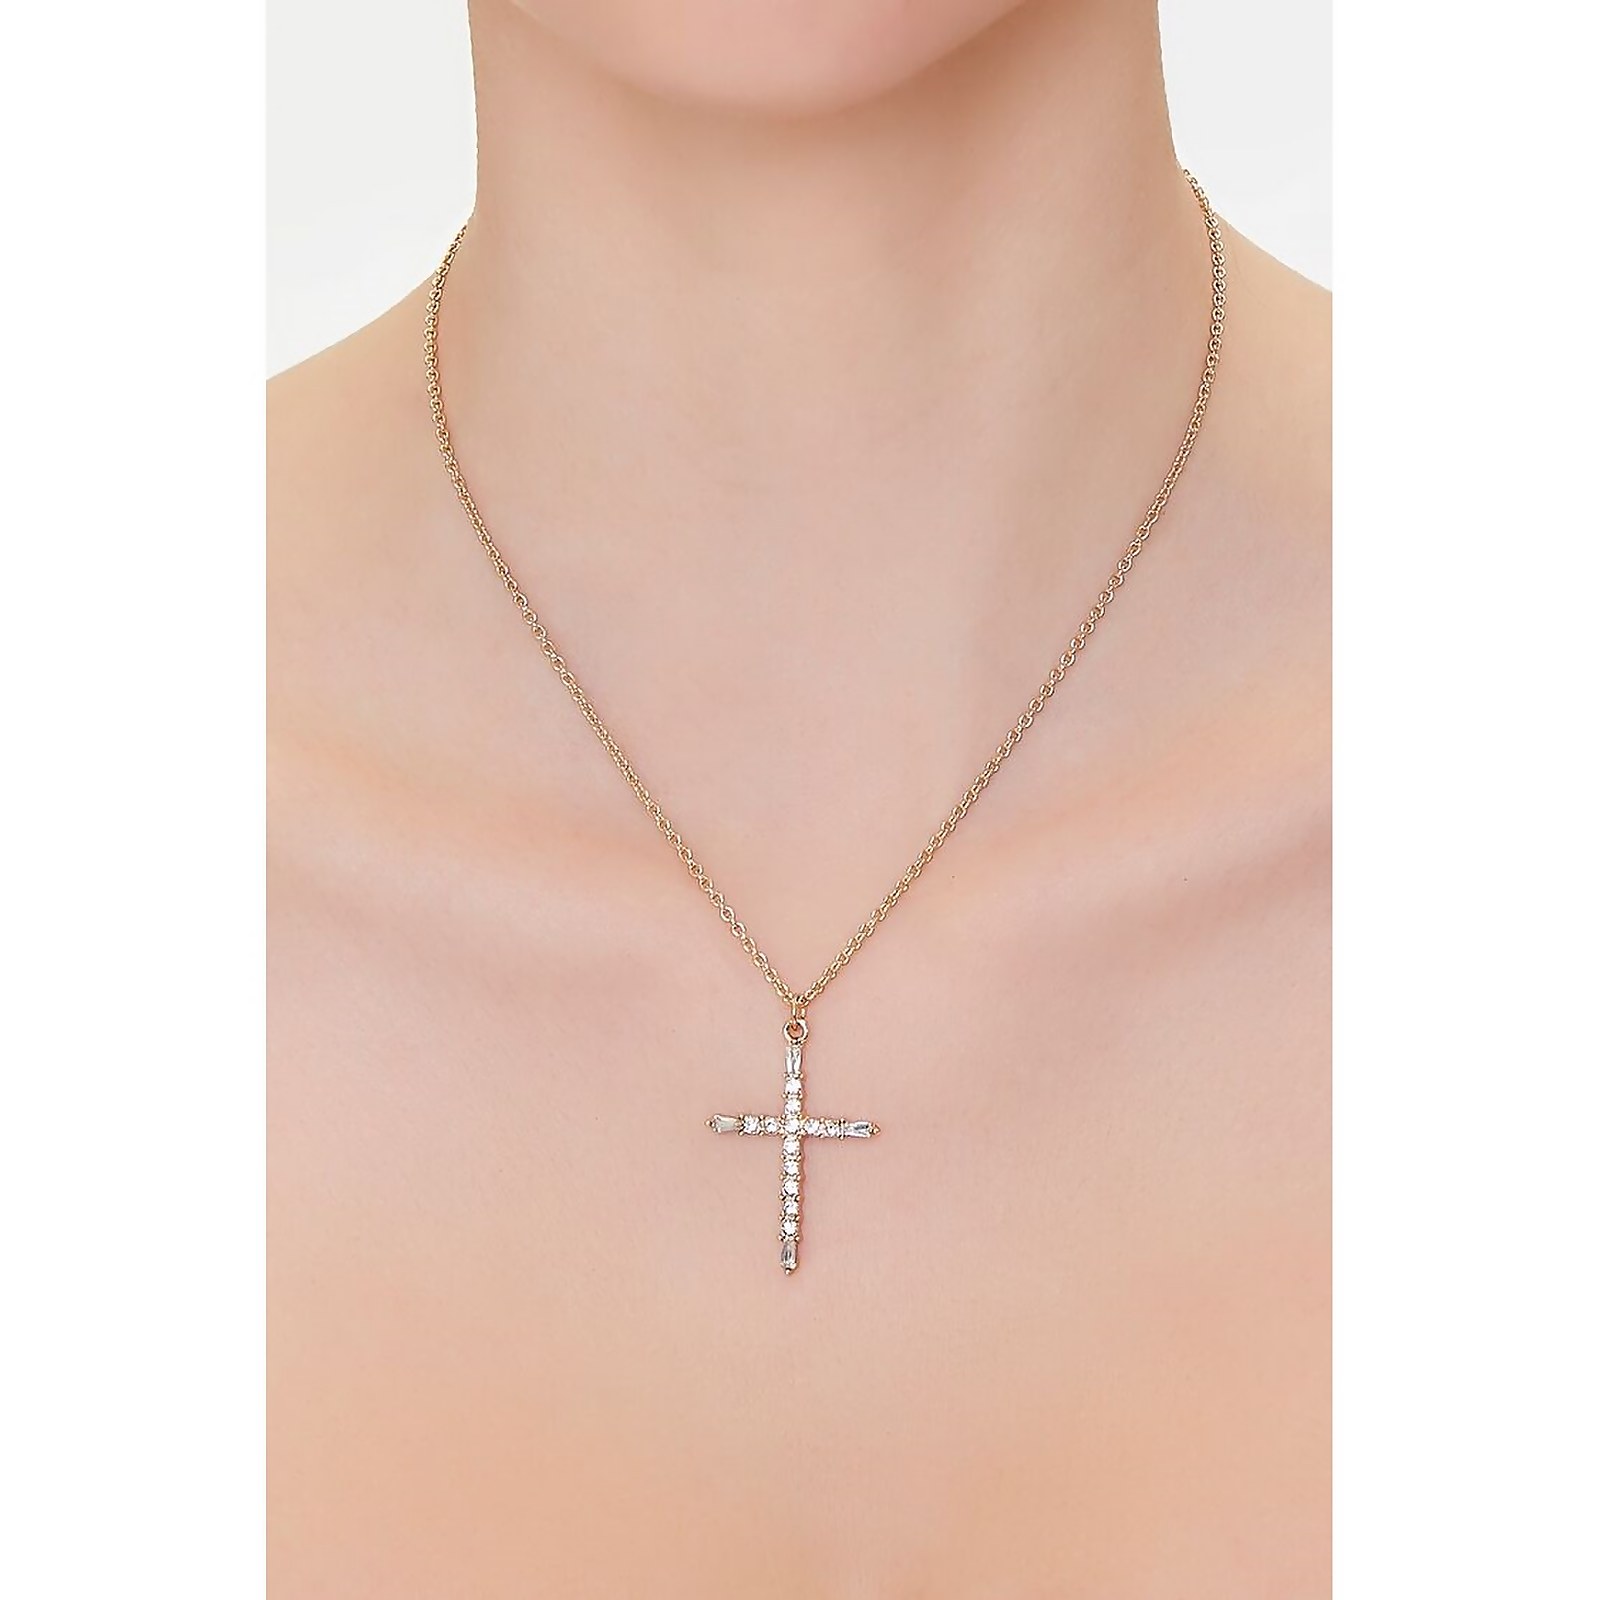 Rhinestone Cross Chain Necklace